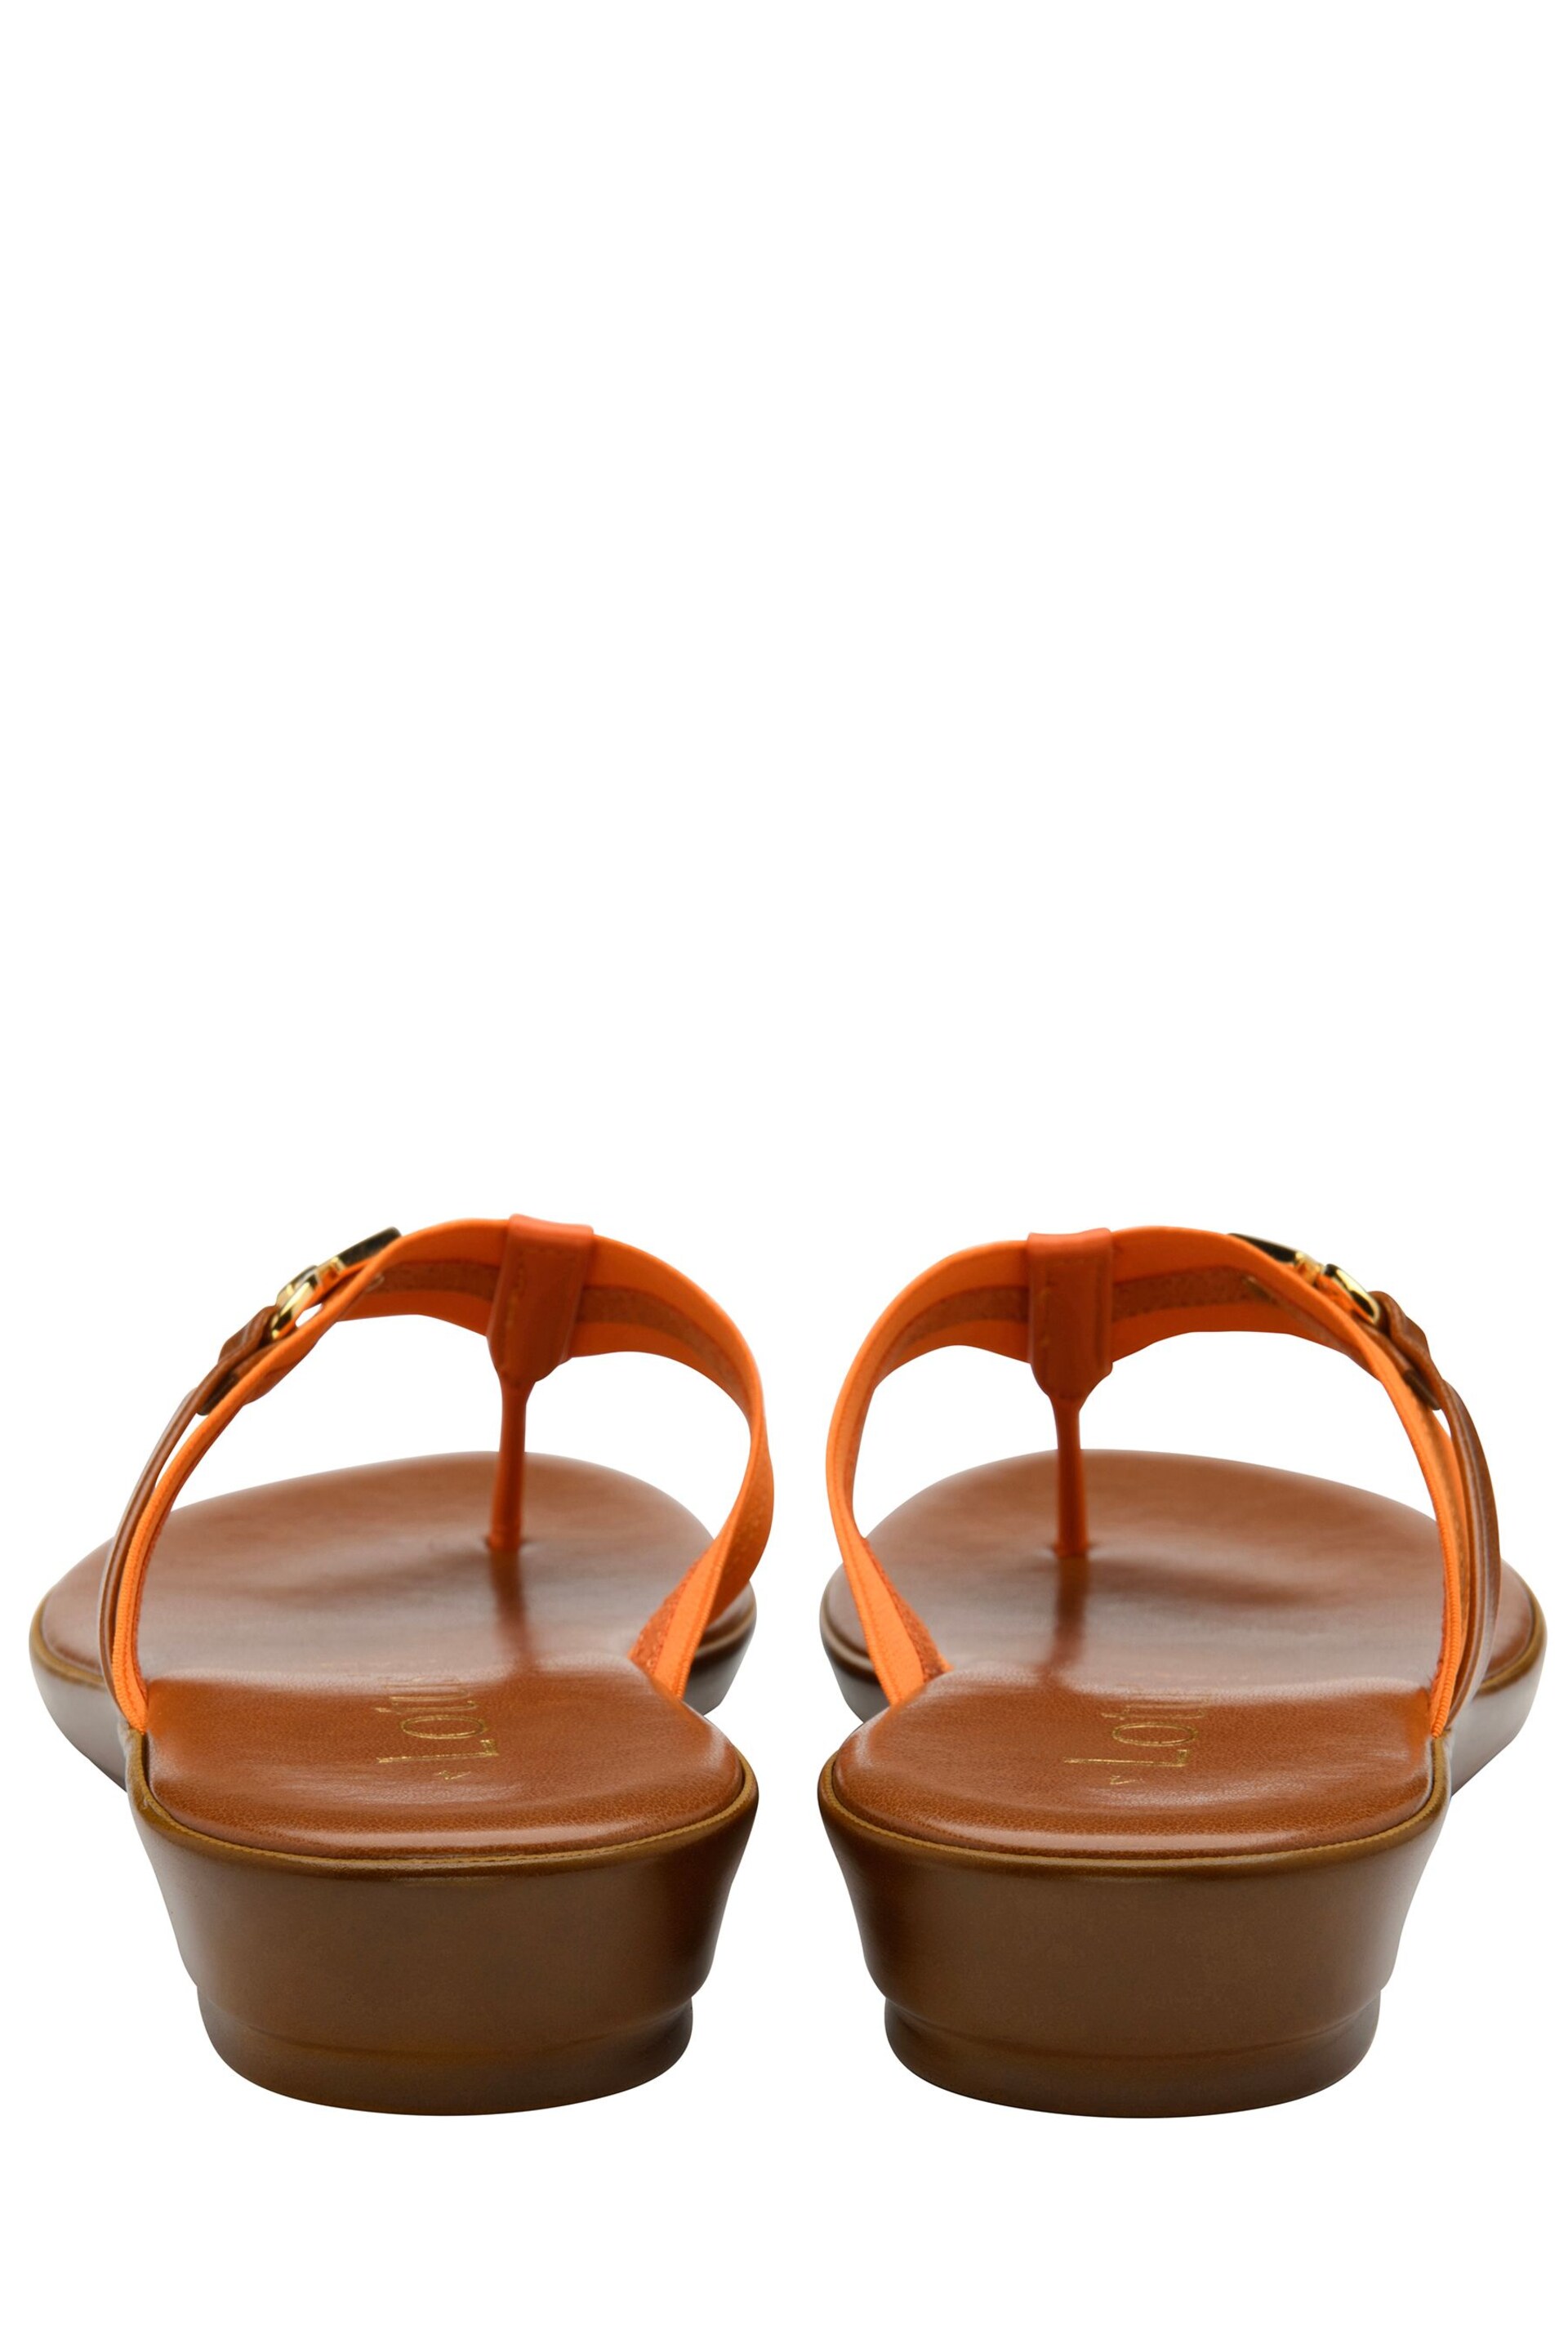 Lotus Orange Toe-Post Sandals - Image 3 of 4